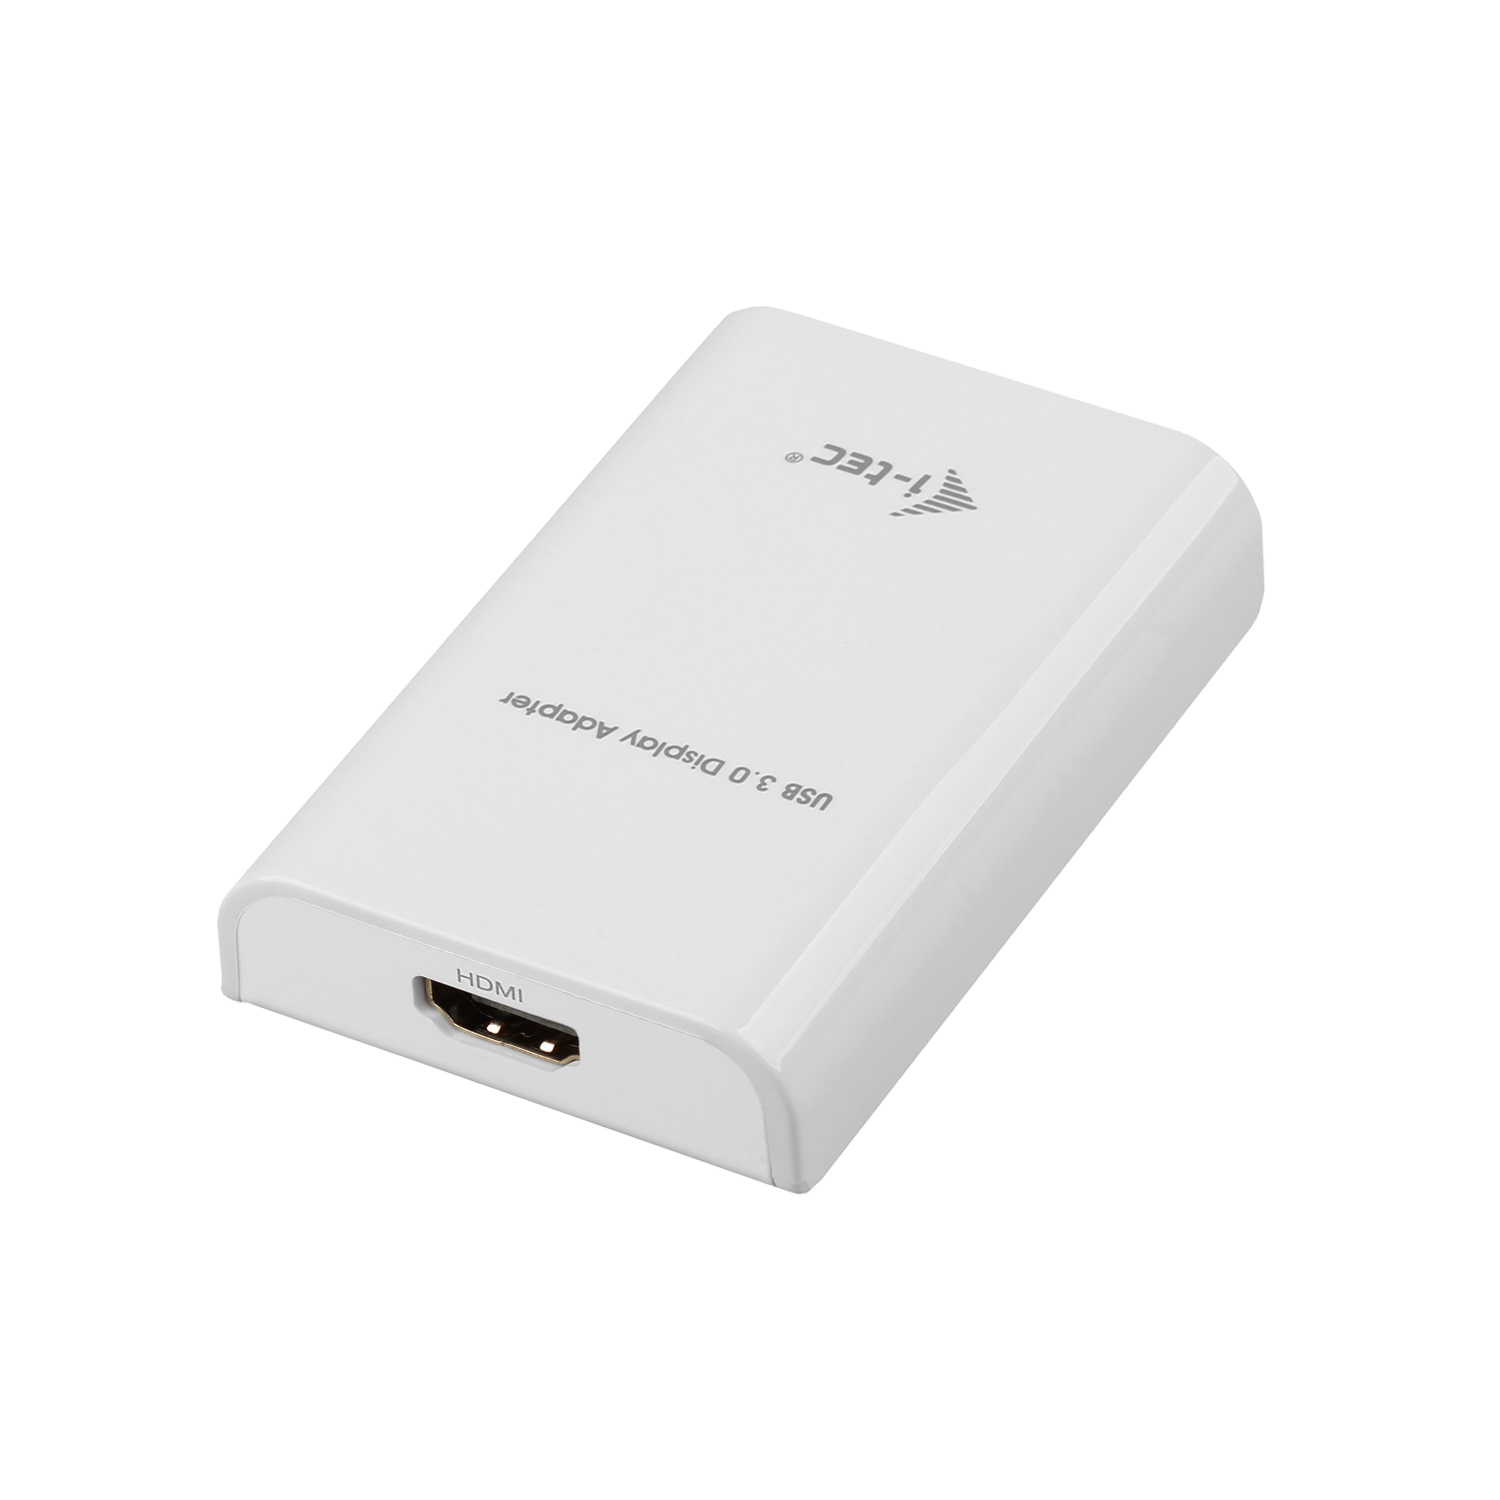  USB 3.0 Advance Display Adapter HDMI external Videoadapter SuperSpeed Full HD Aufloesung 2048x1152 accessories Ultrabook